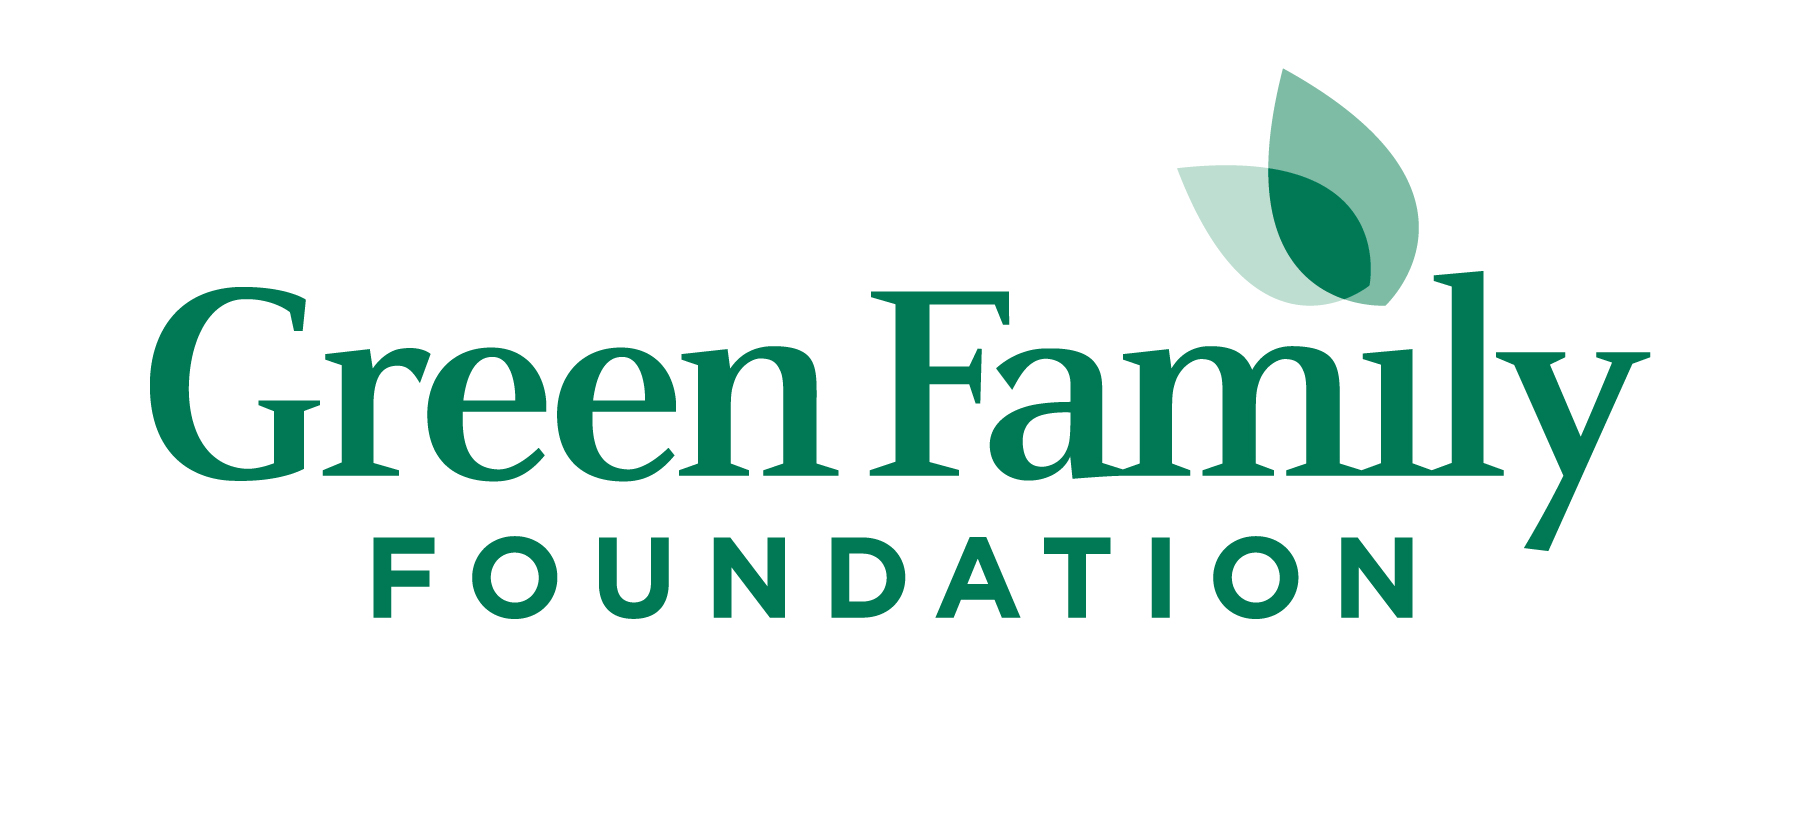 GreenFamilyFoundation Logo 1